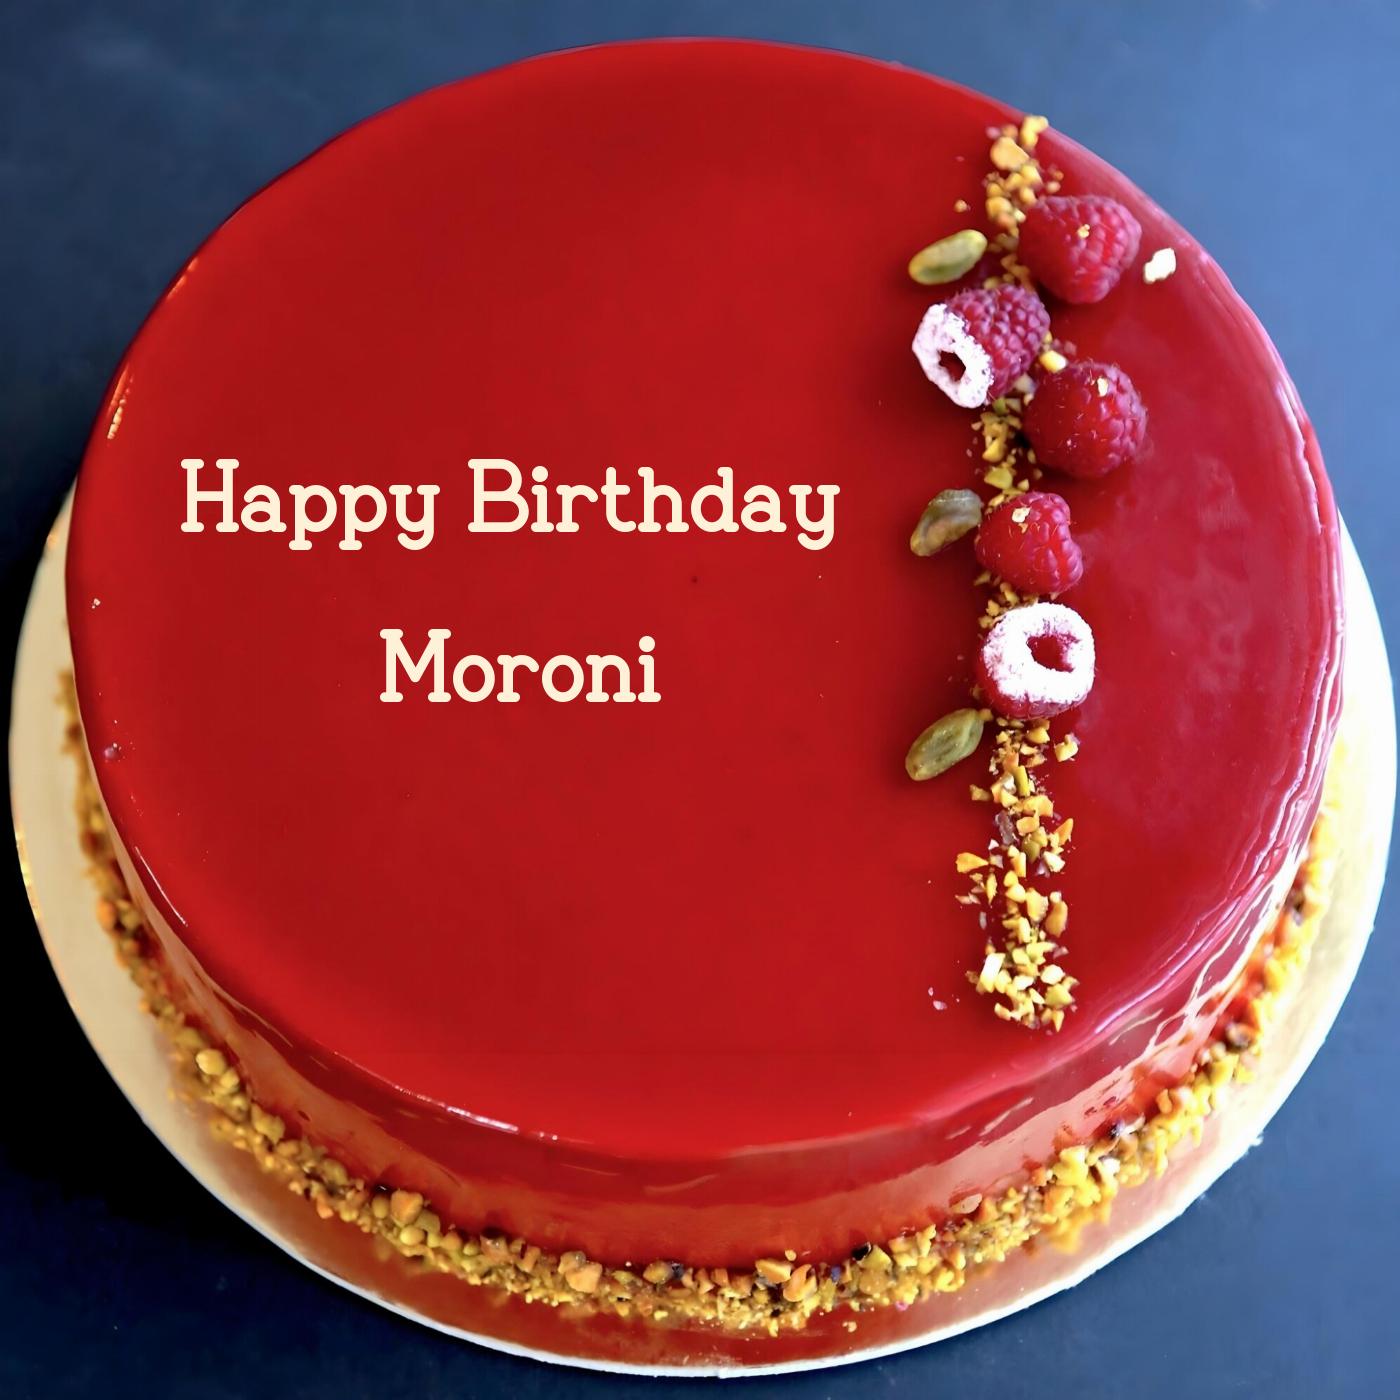 Happy Birthday Moroni Red Raspberry Cake